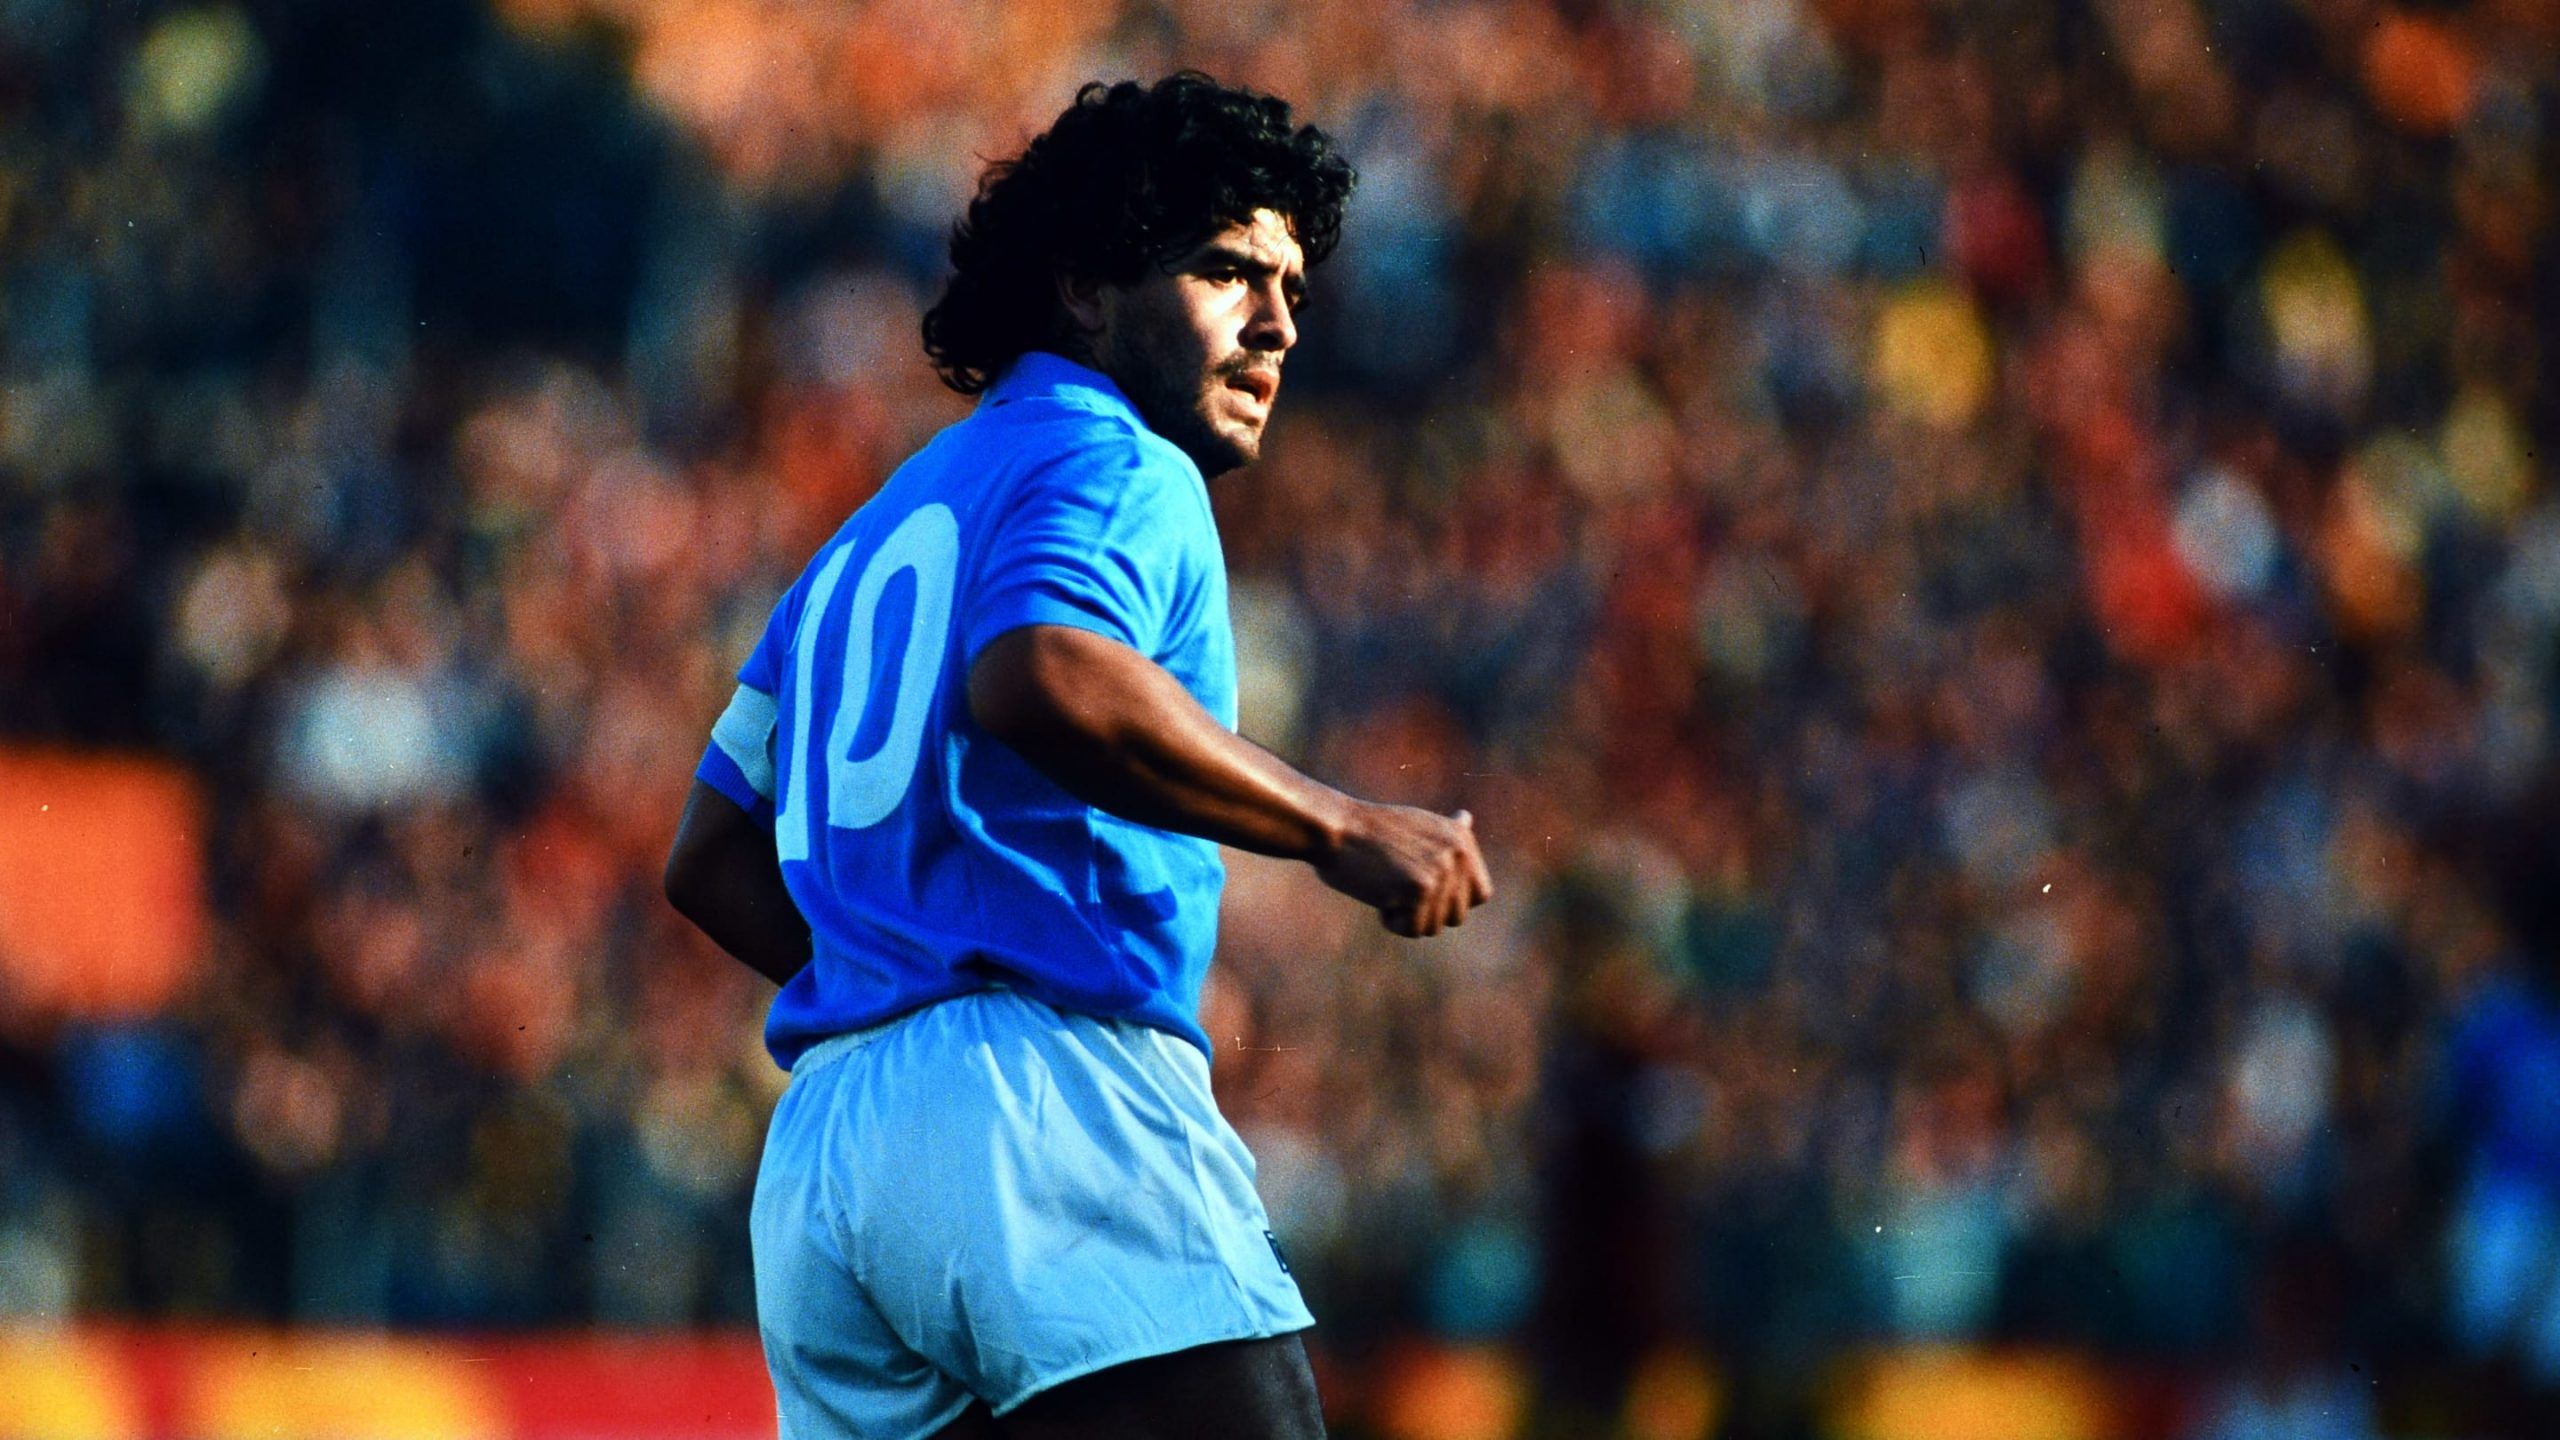 Diego Maradona: A Career in Image